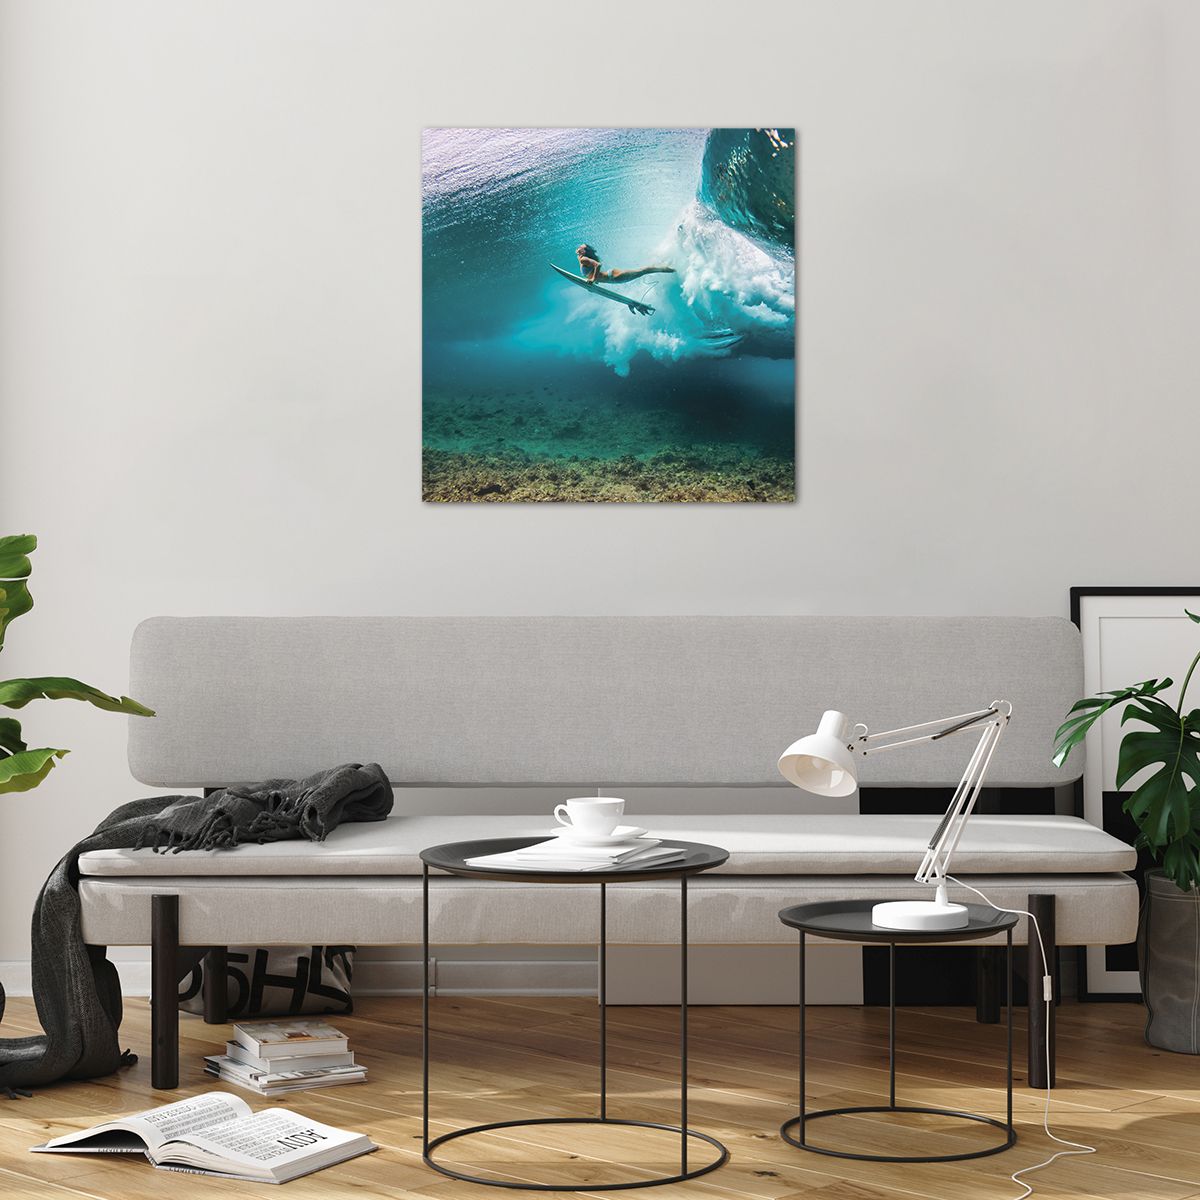 Obrazy na szkle Surfing, Obrazy na szkle Podwodny Świat, Obrazy na szkle Kobieta, Obrazy na szkle Ocean, Obrazy na szkle Sport